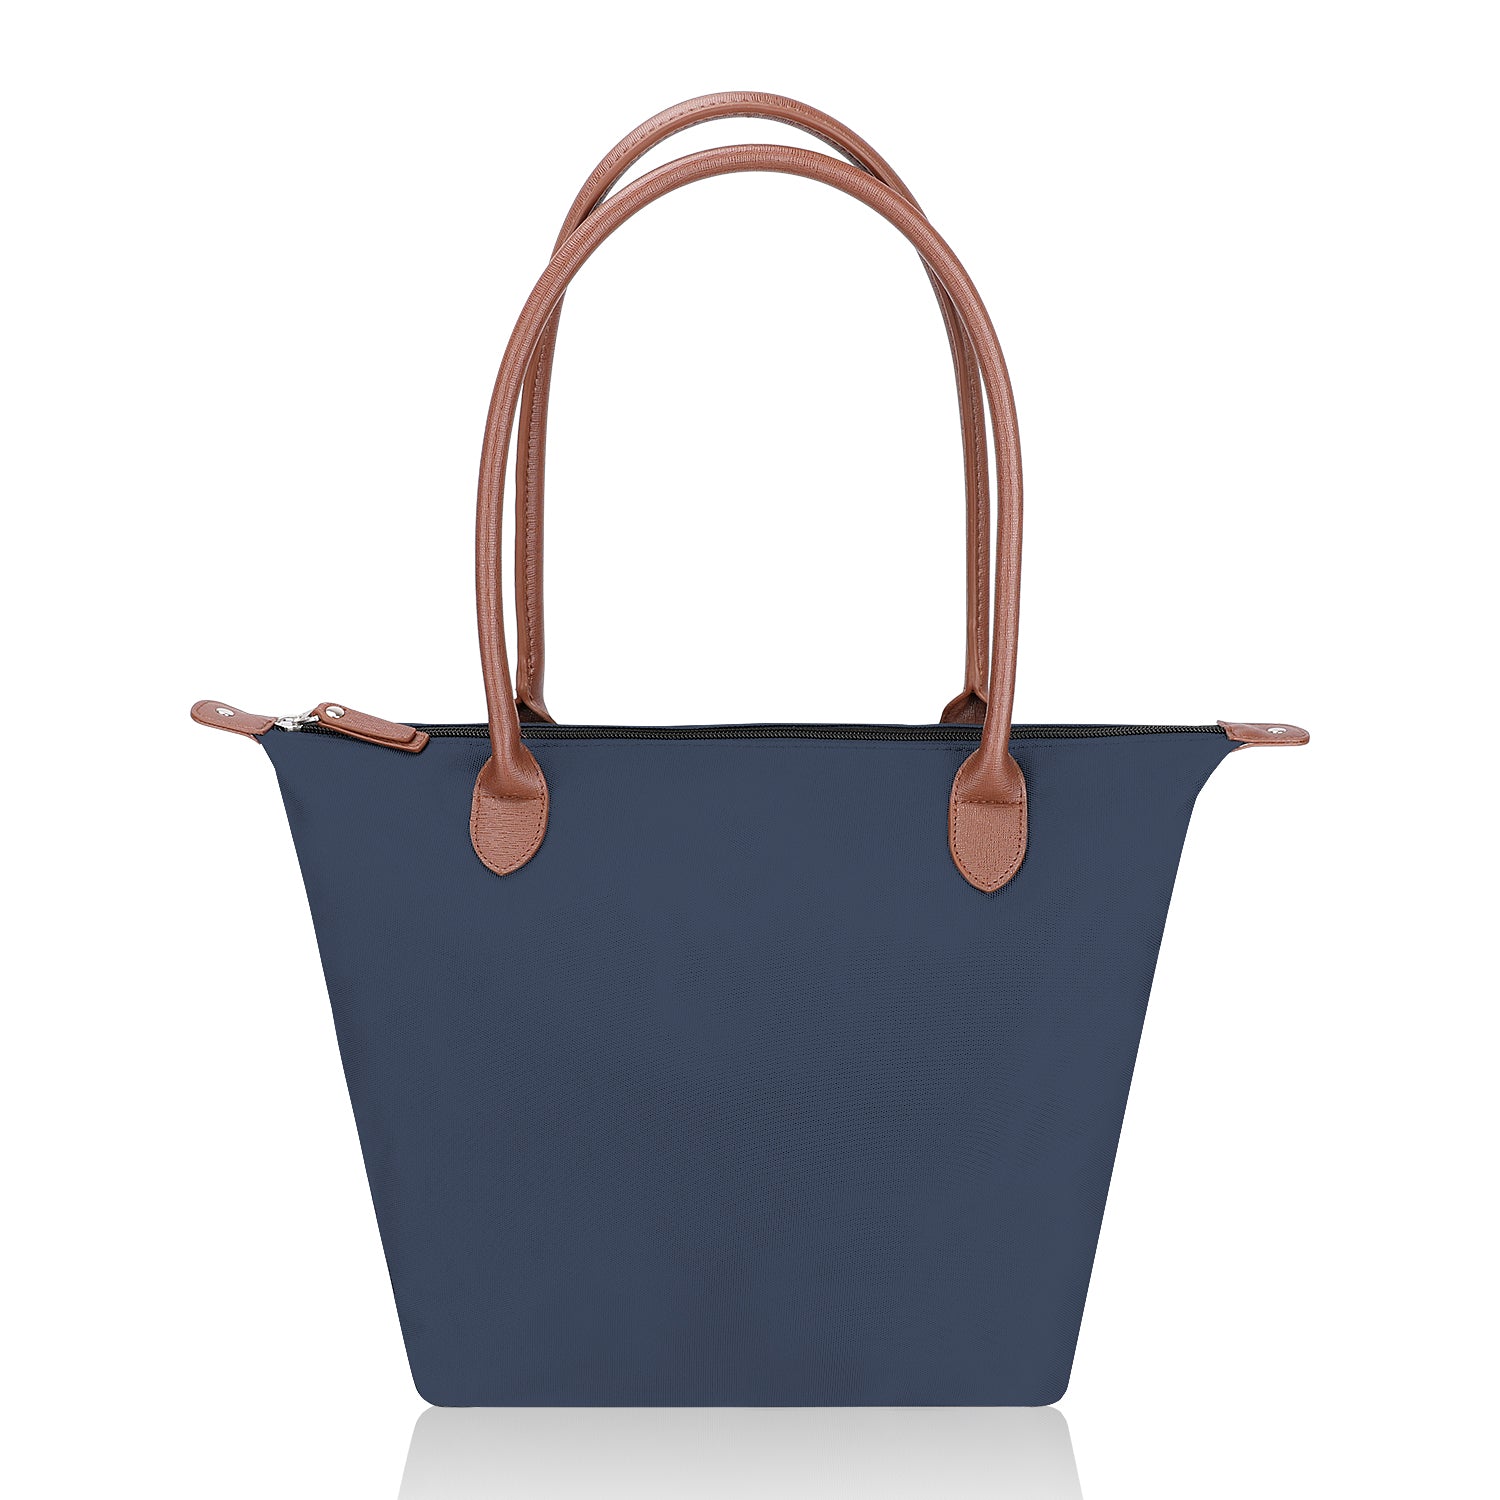 Blue Cotton Tote Bag – Bag People Australia